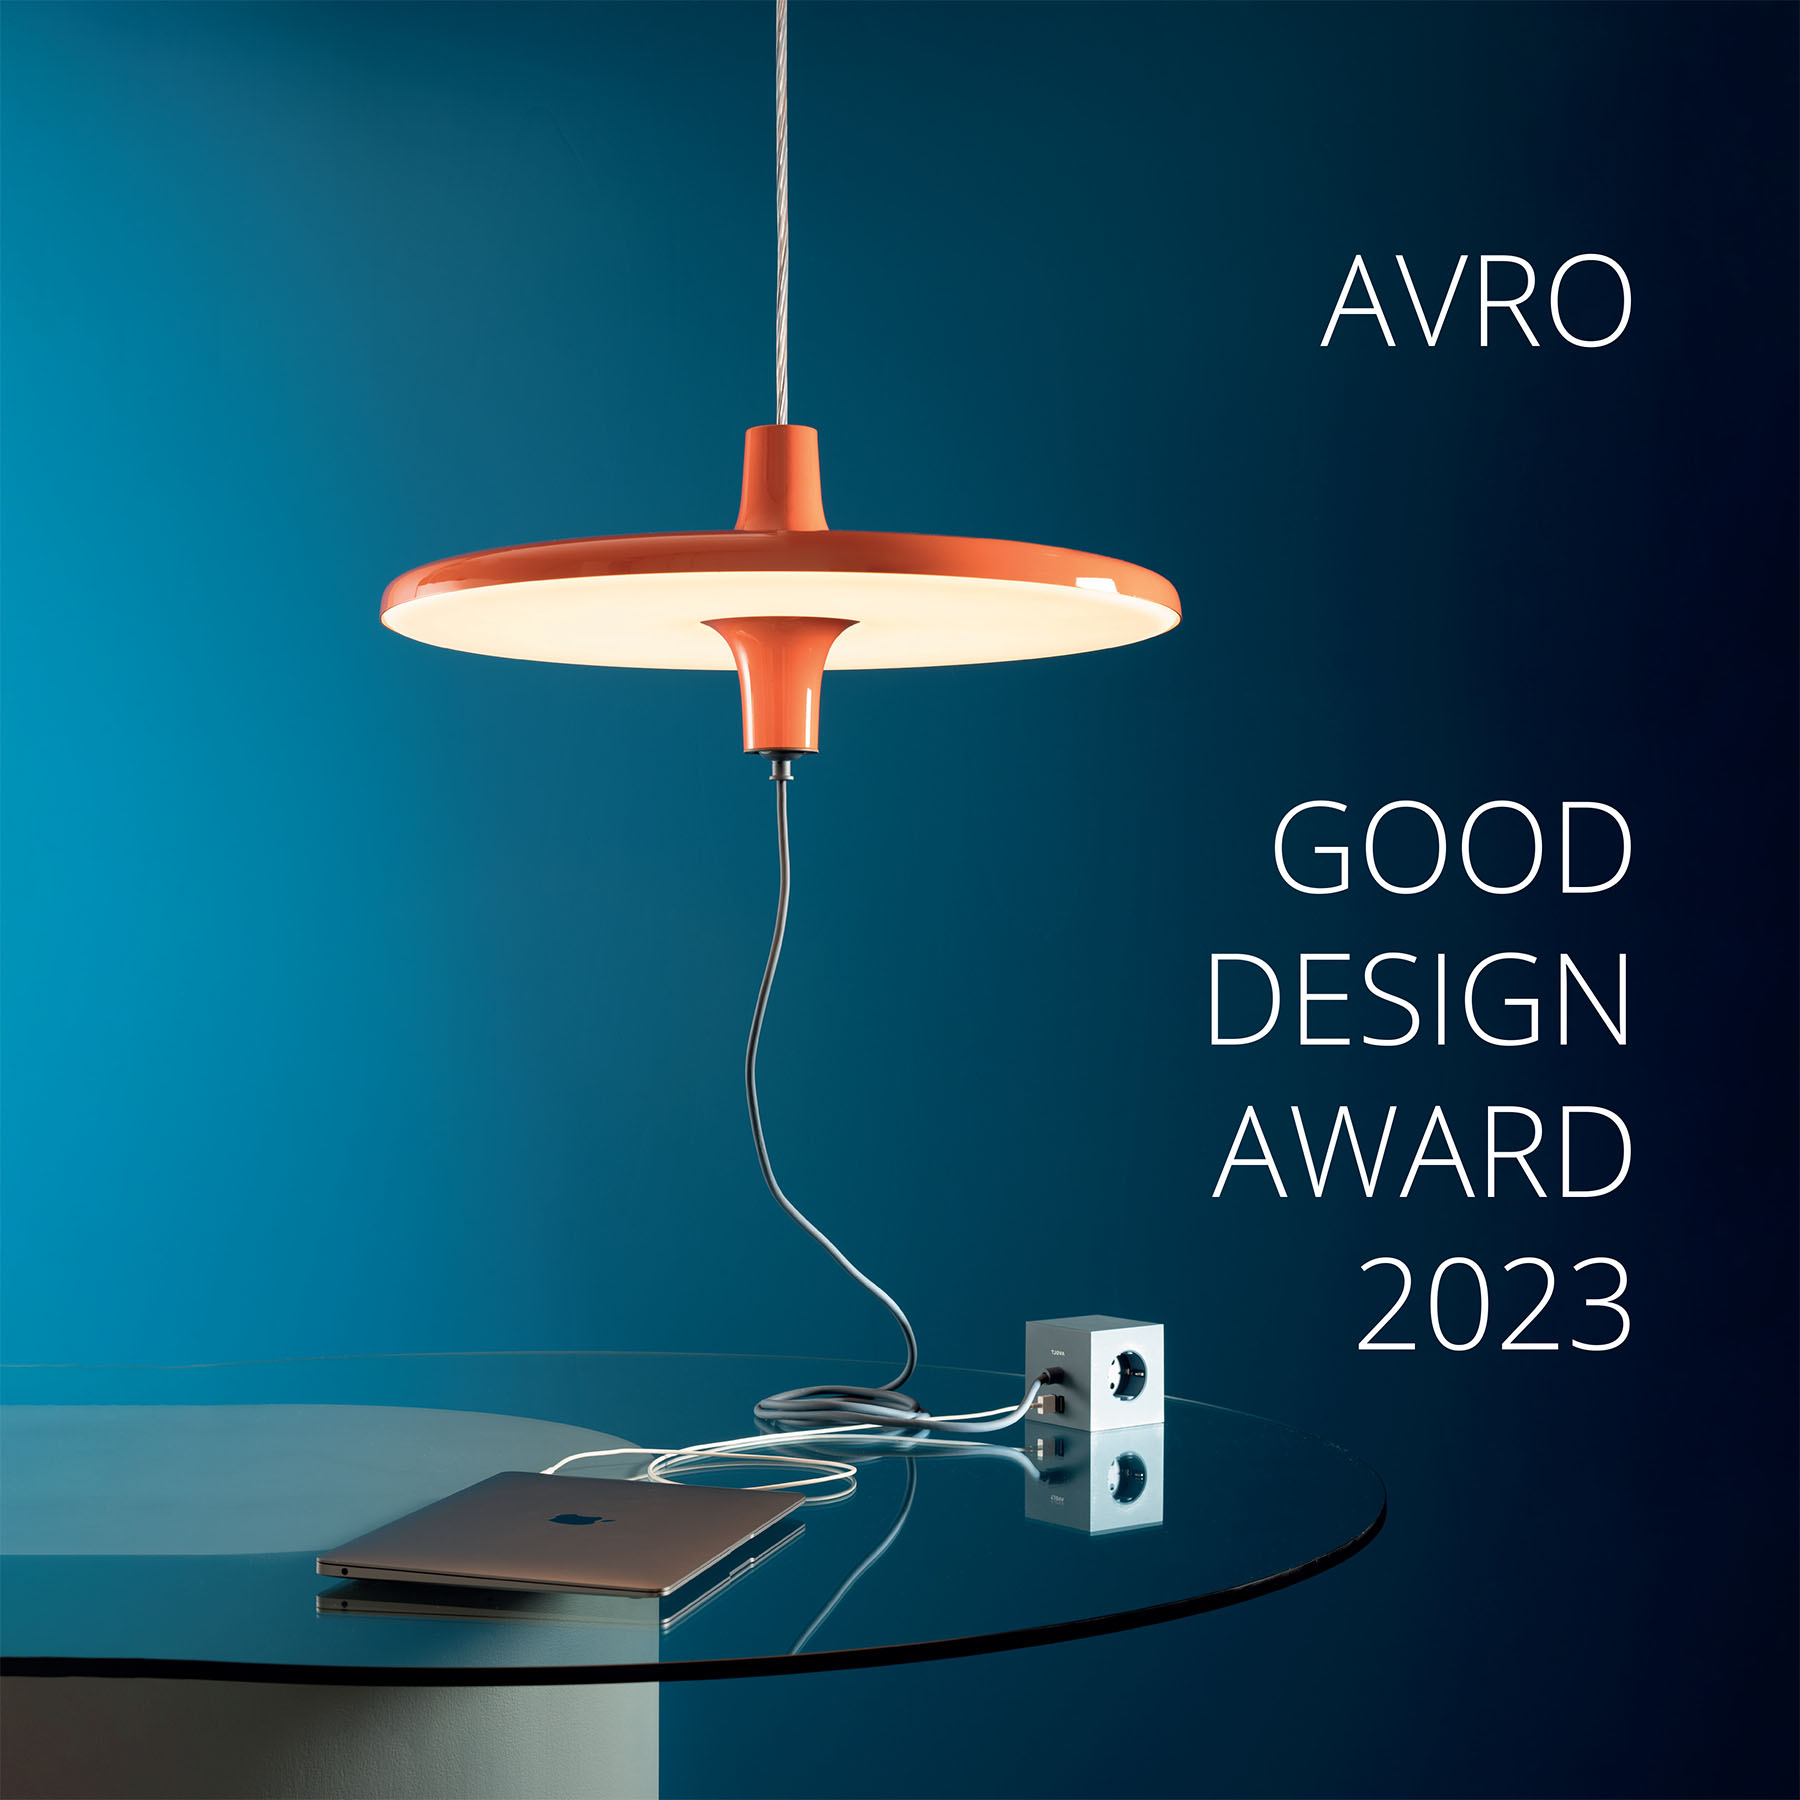 Avro wins Good Design Awards 2023